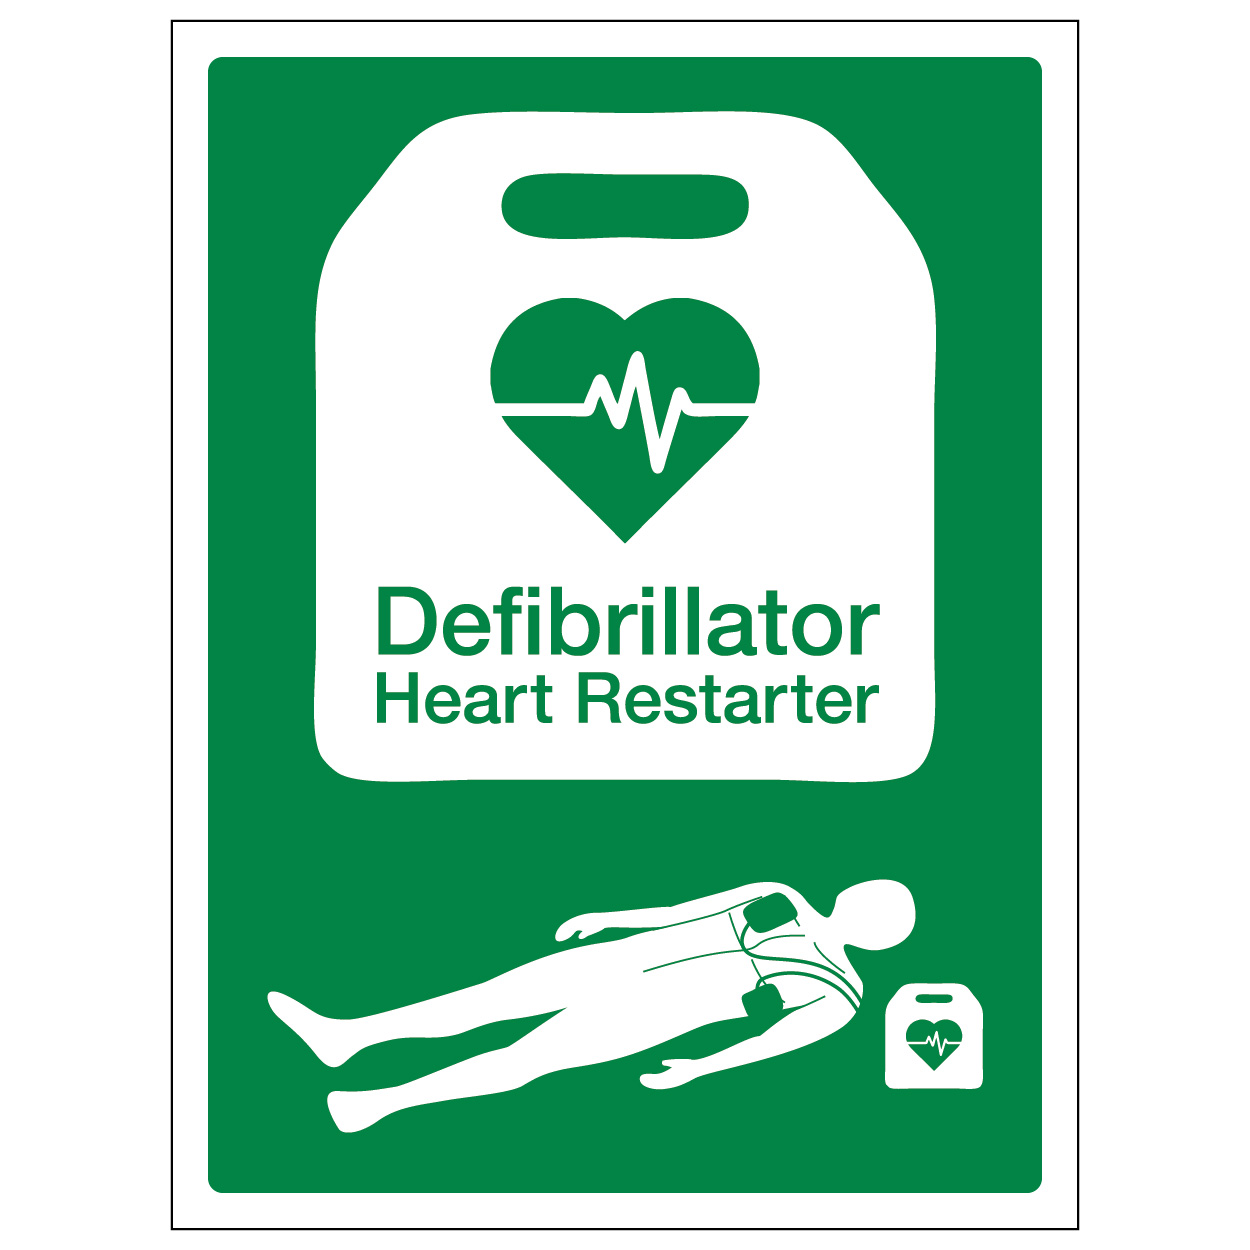 638128296138355856_defibrillator-heart-restarter_web.png